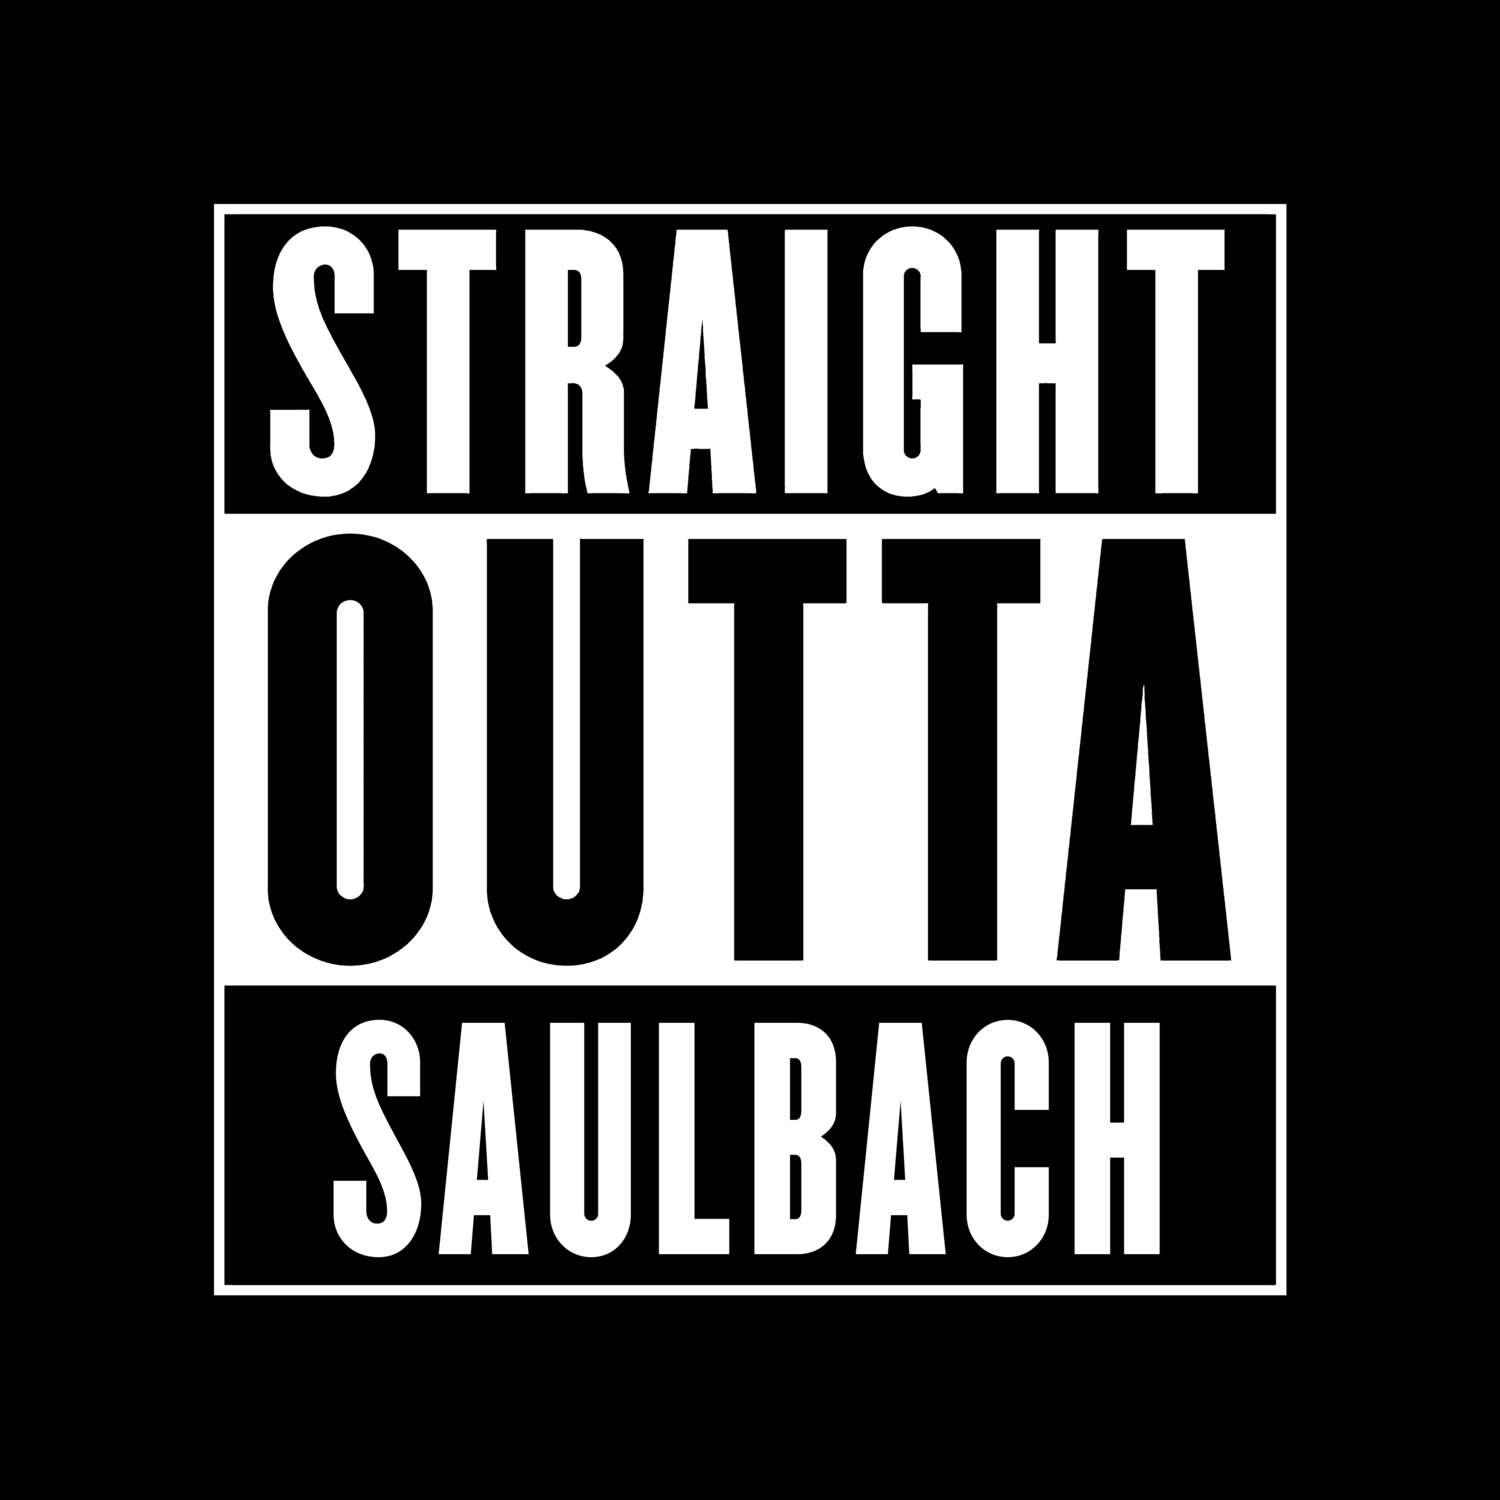 Saulbach T-Shirt »Straight Outta«